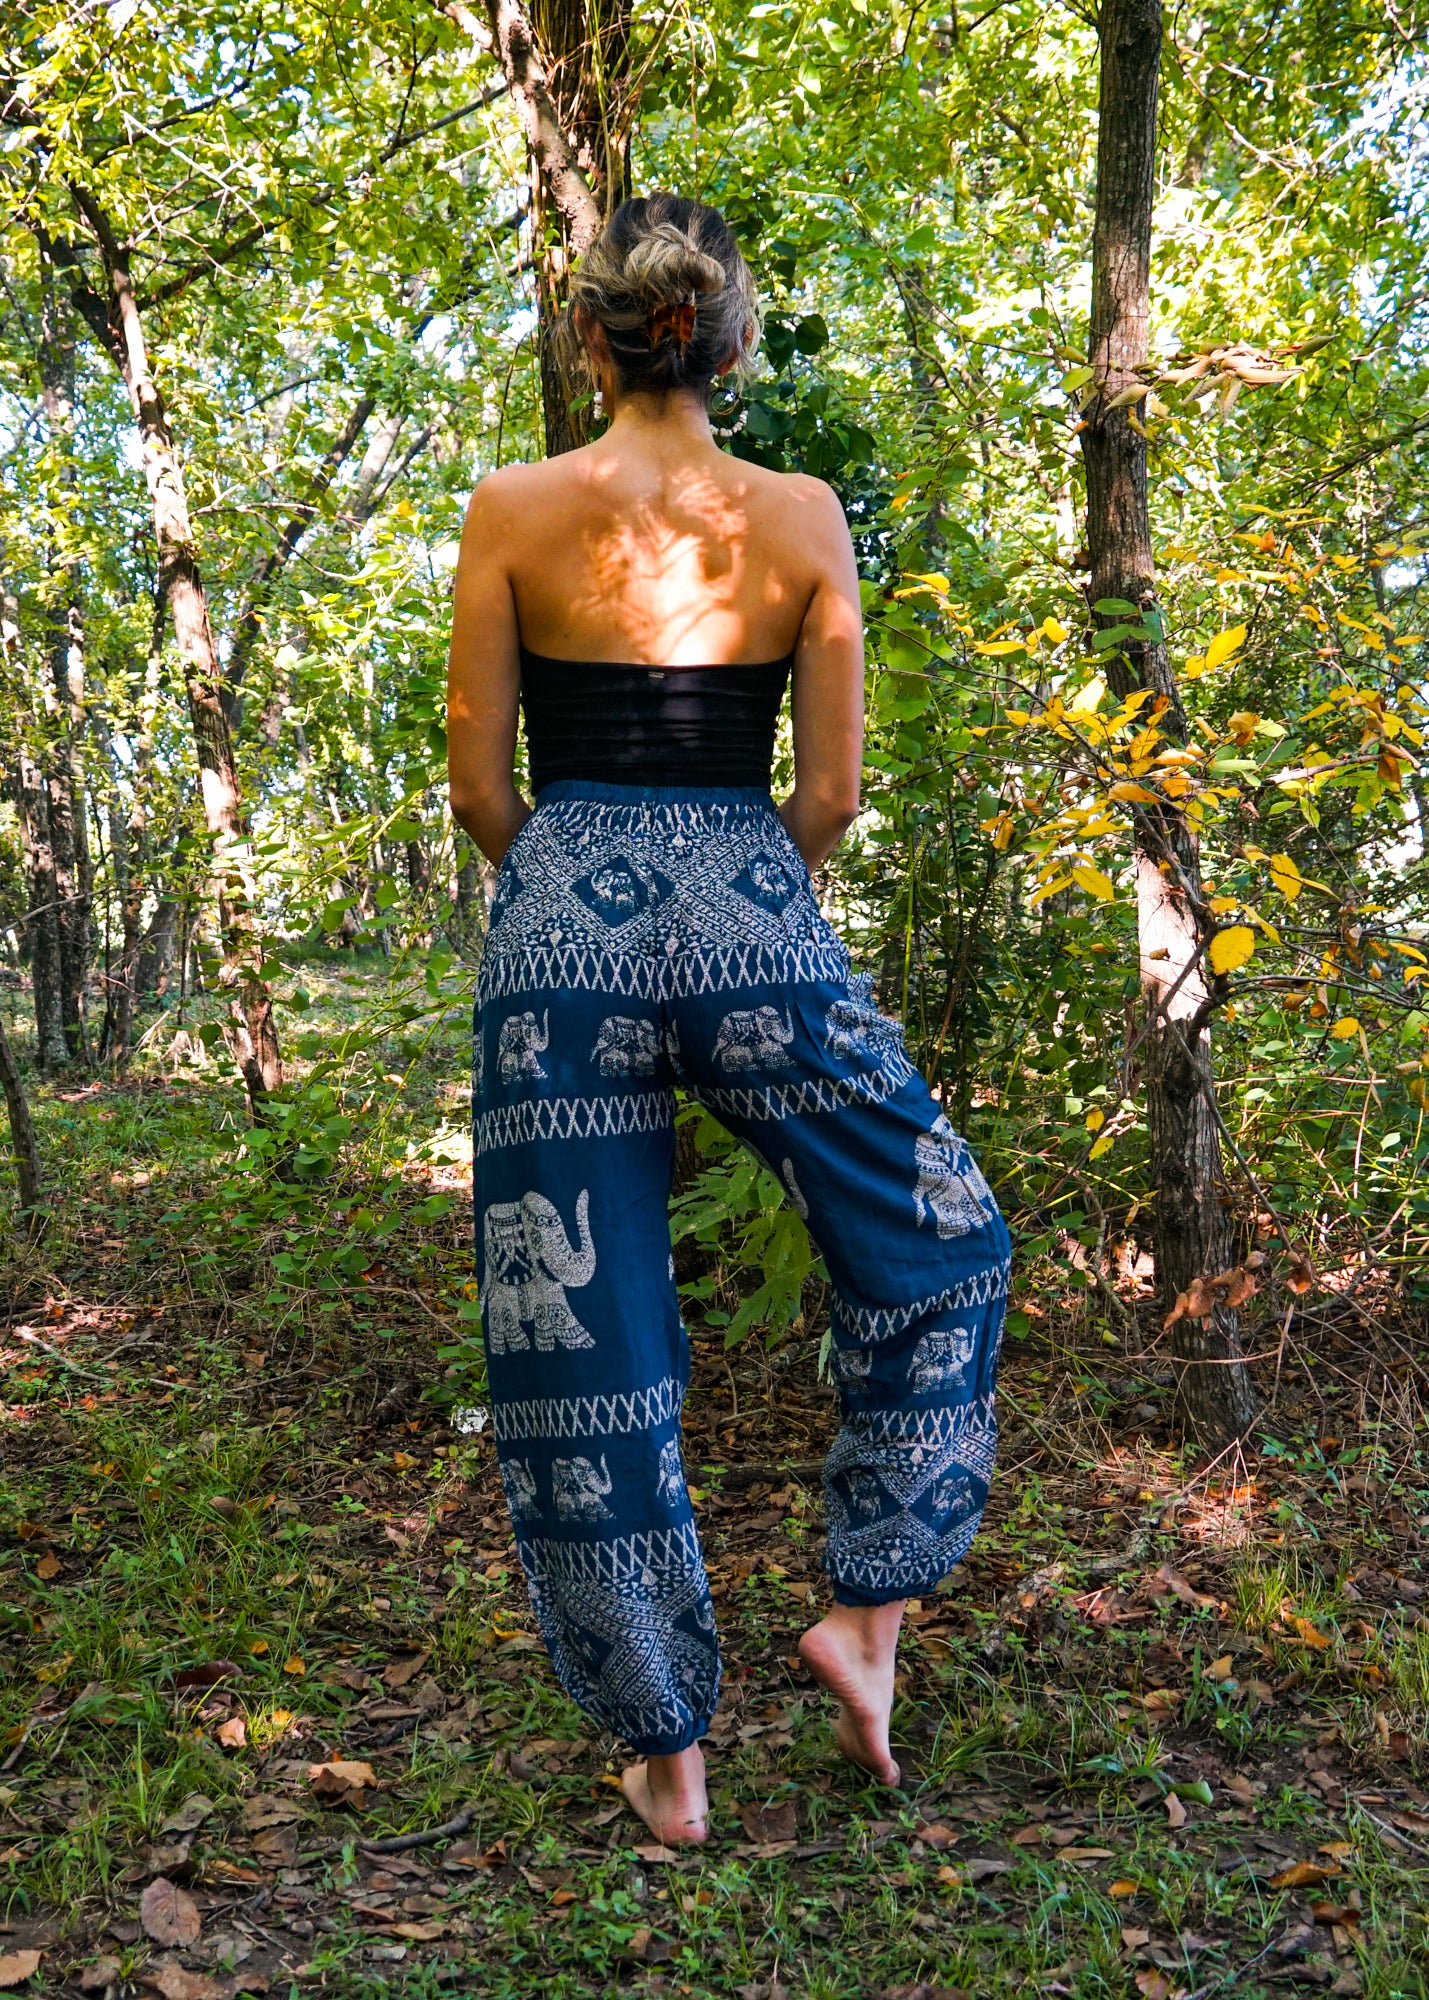 Hill Tribe Elephant Women's Elephant Pants in Turquoise – Harem Pants